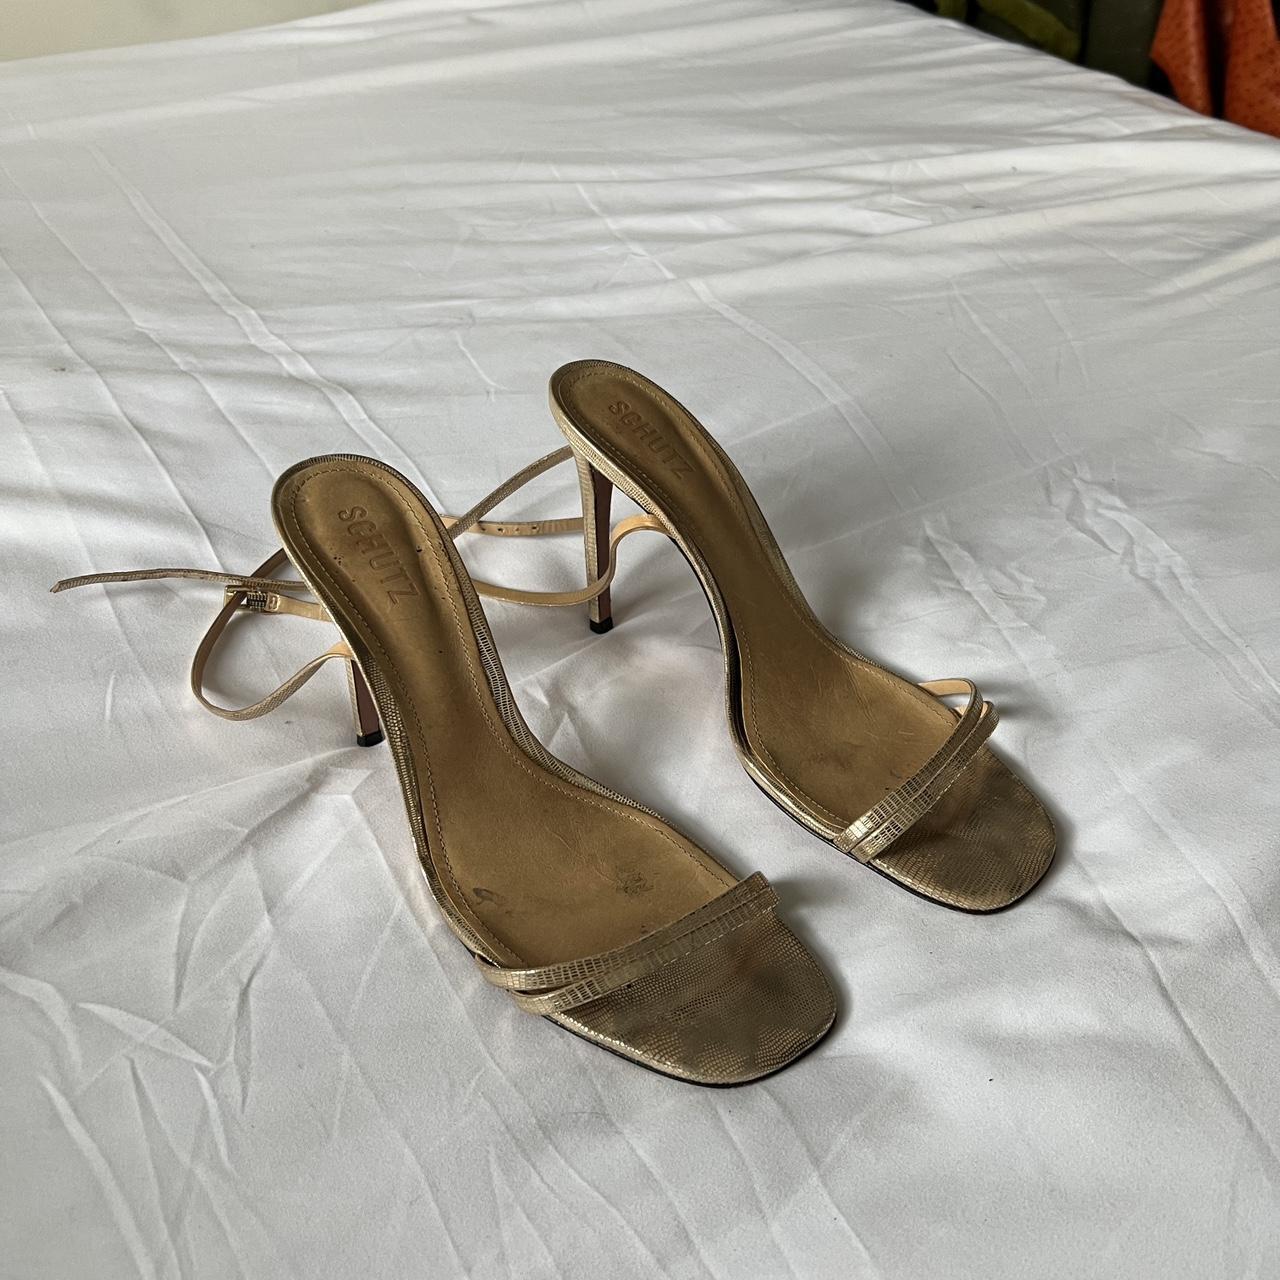 Schutz Women's Gold Sandals